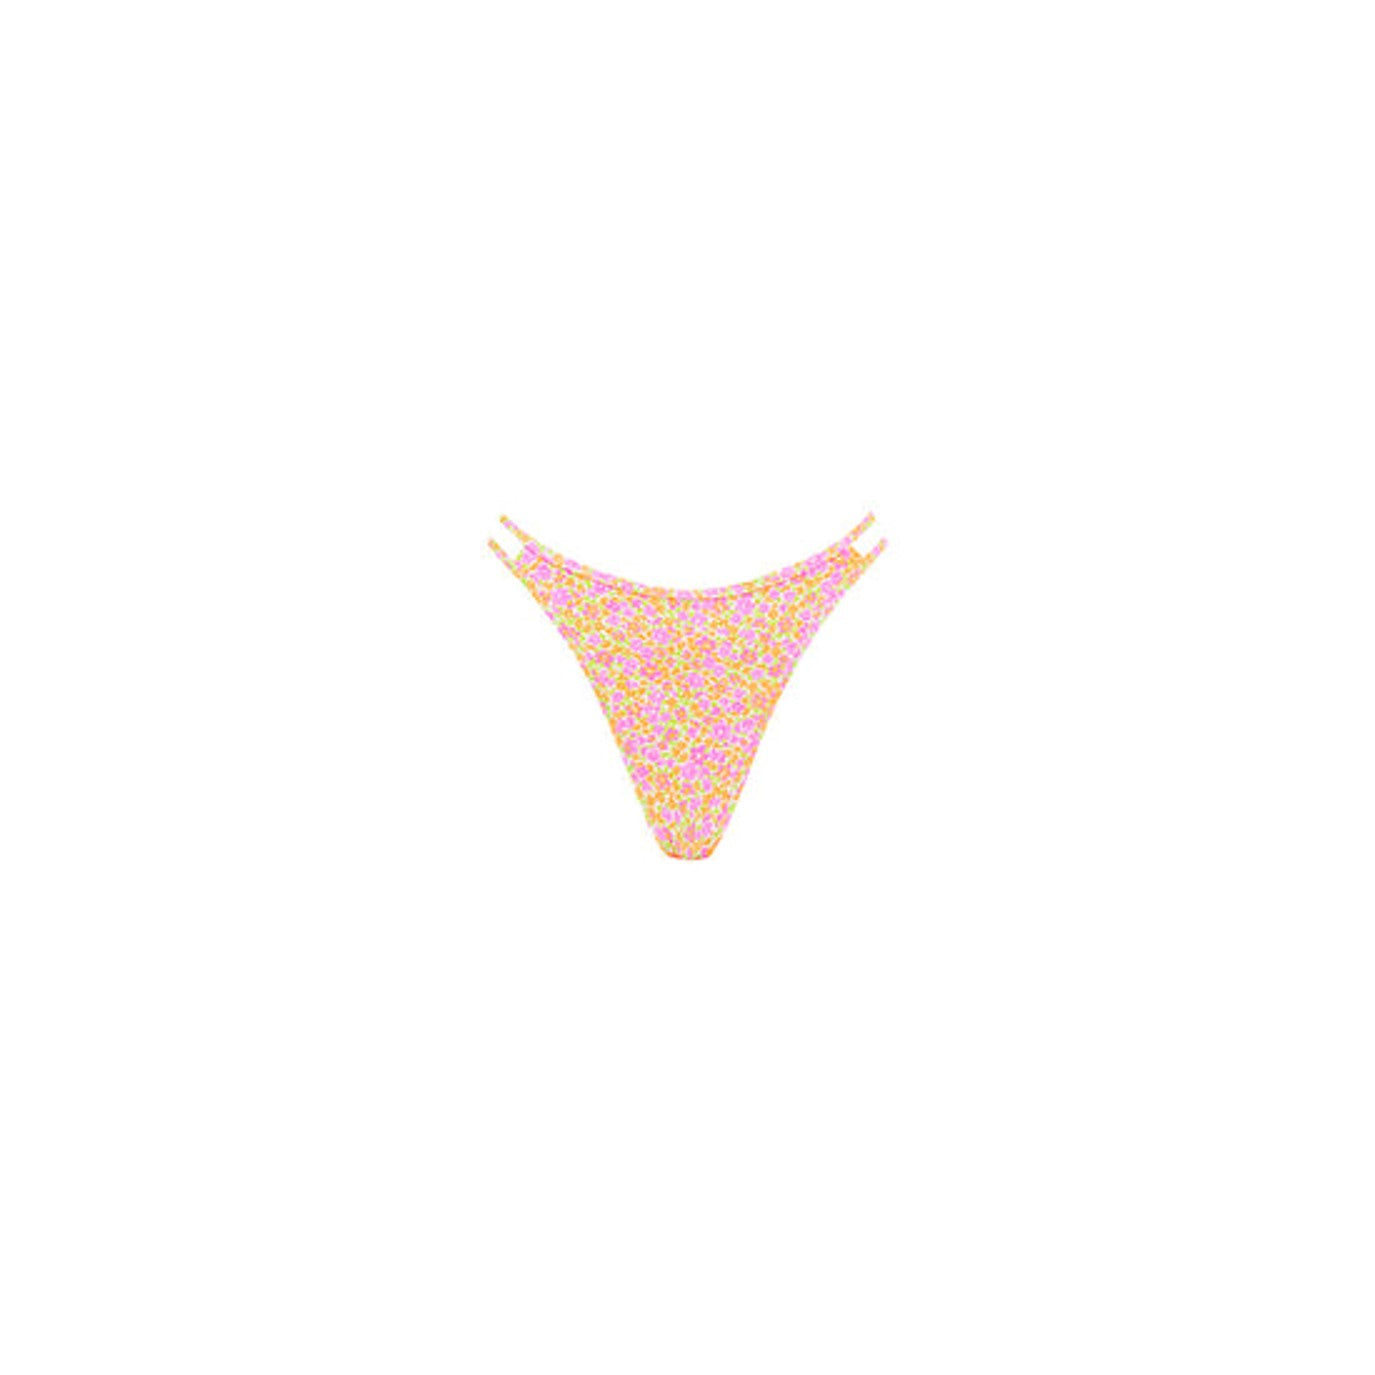 Champagne Blossom:  Twin Strap Cheeky Bikini Bottom